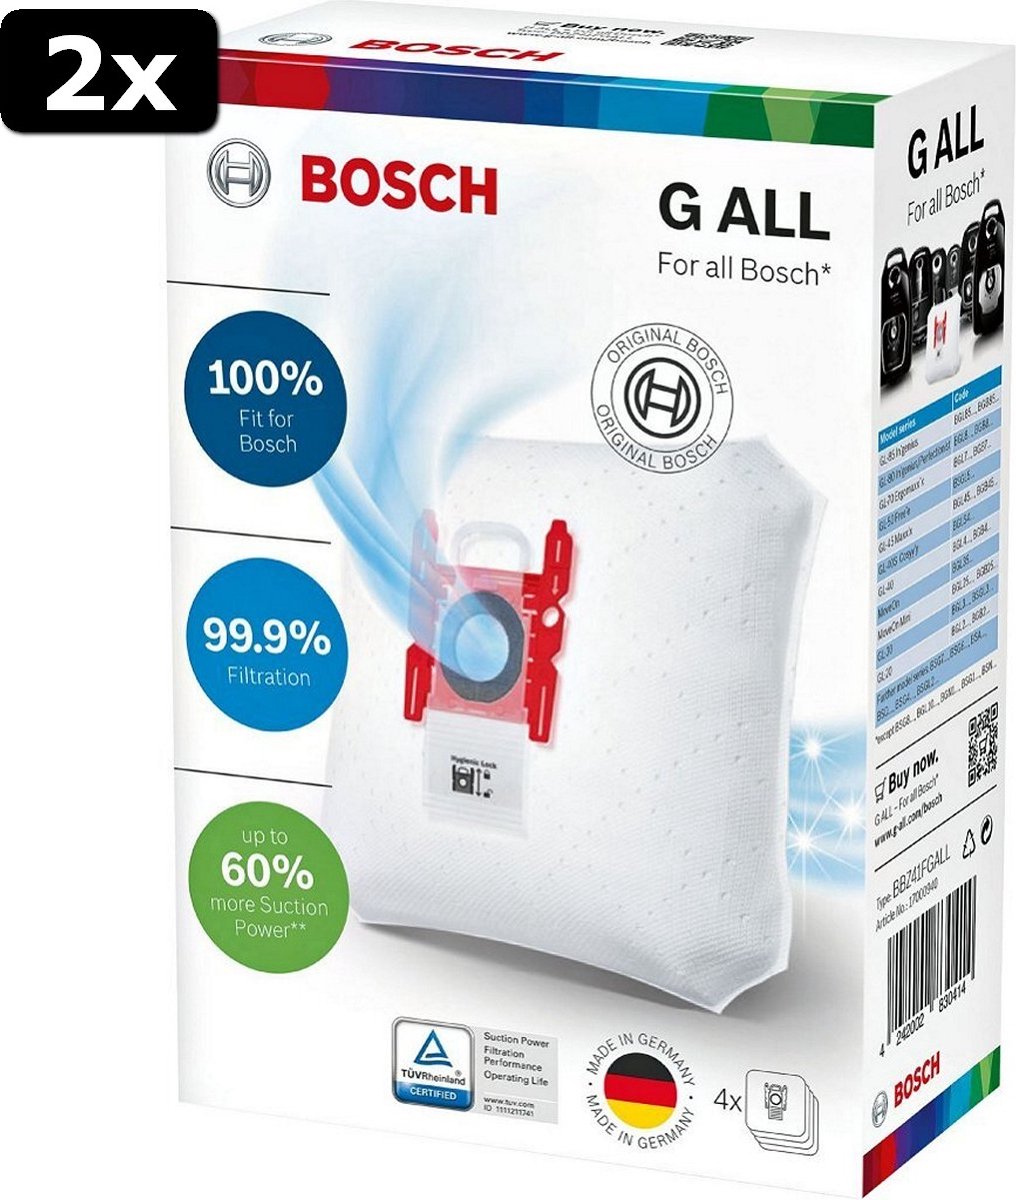 2x Bosch BBZ41F G ALL Powerpro Stofzak 4 Stuks